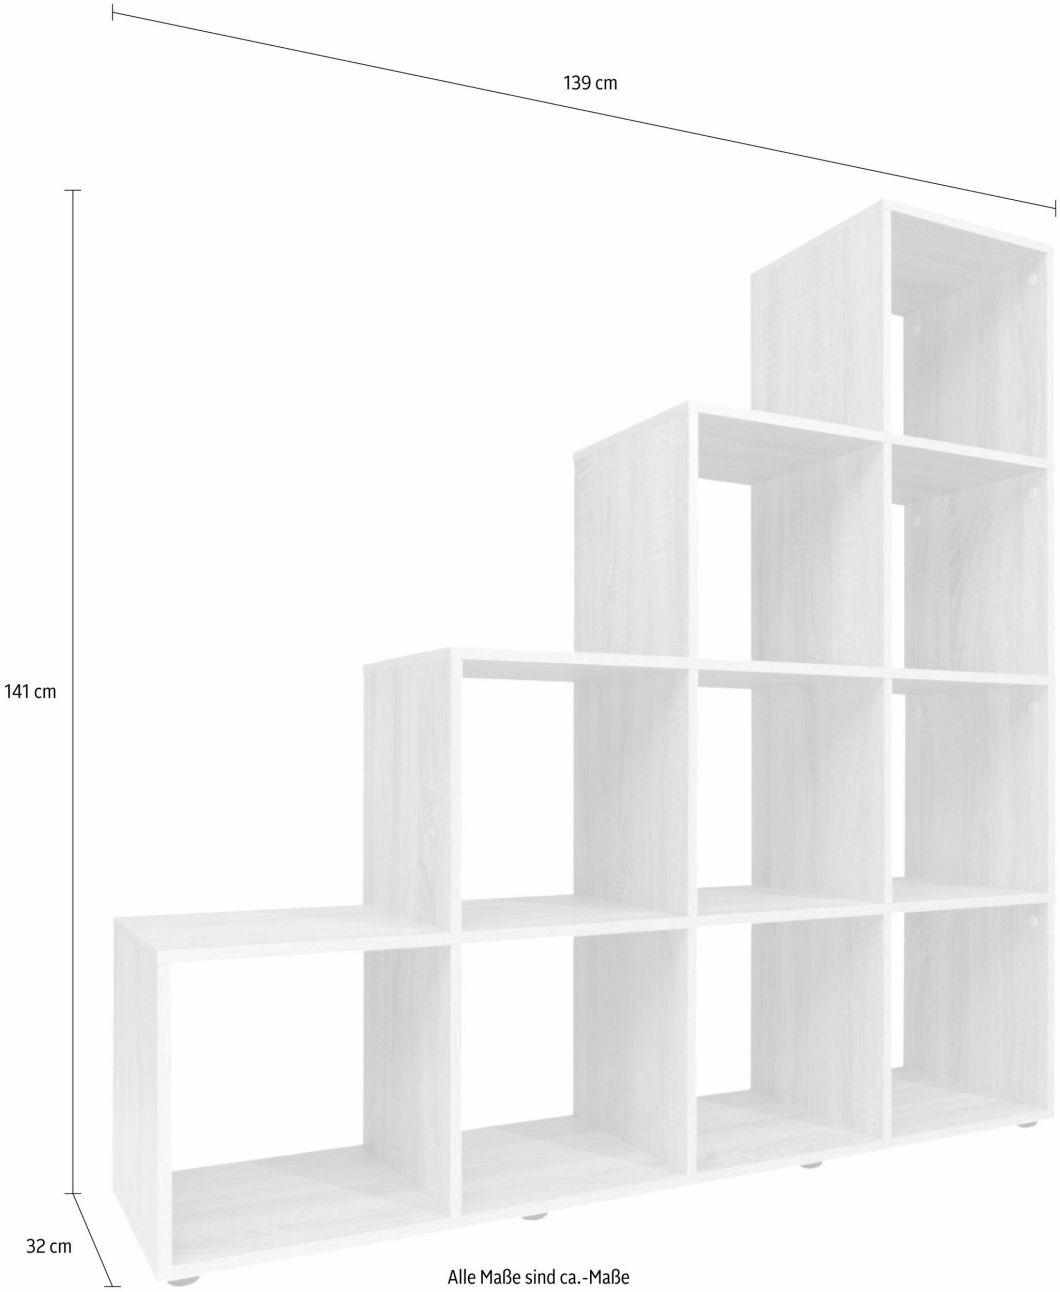 4-Tiers Stand White Wall Corner Ladder Bookshelf for Living Room